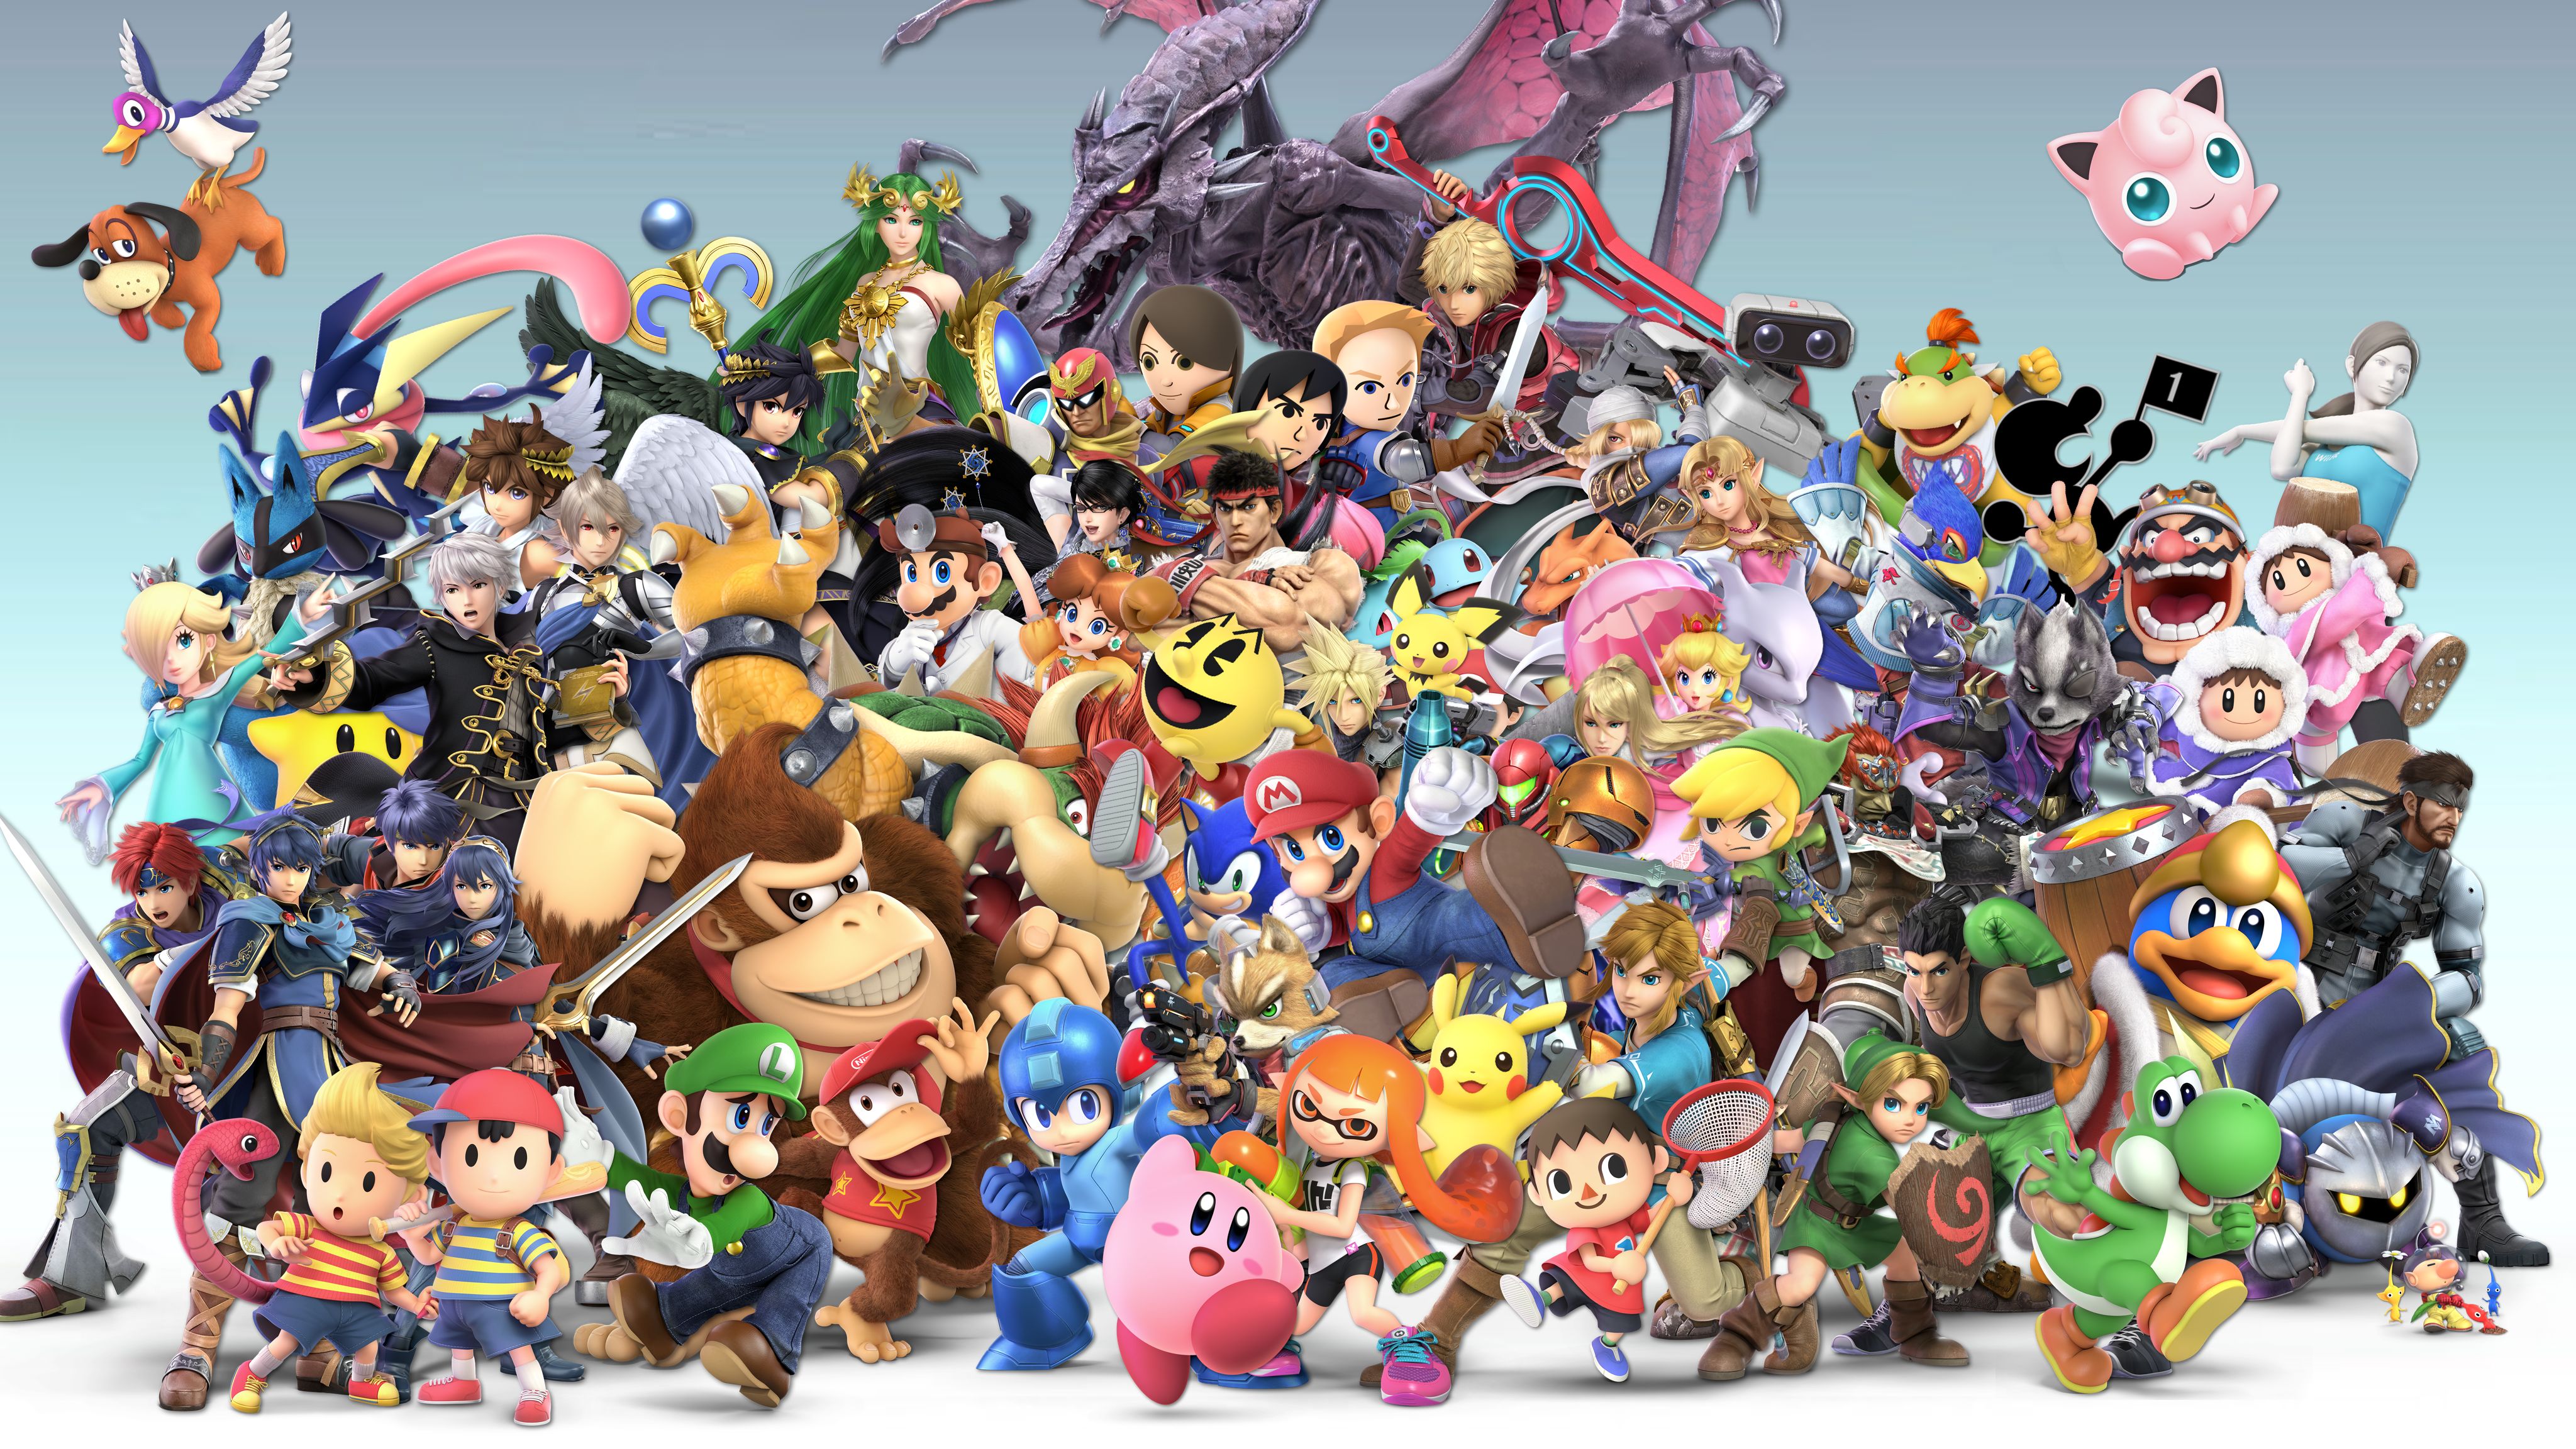 Nintendo super Smash Bros. Ultimate